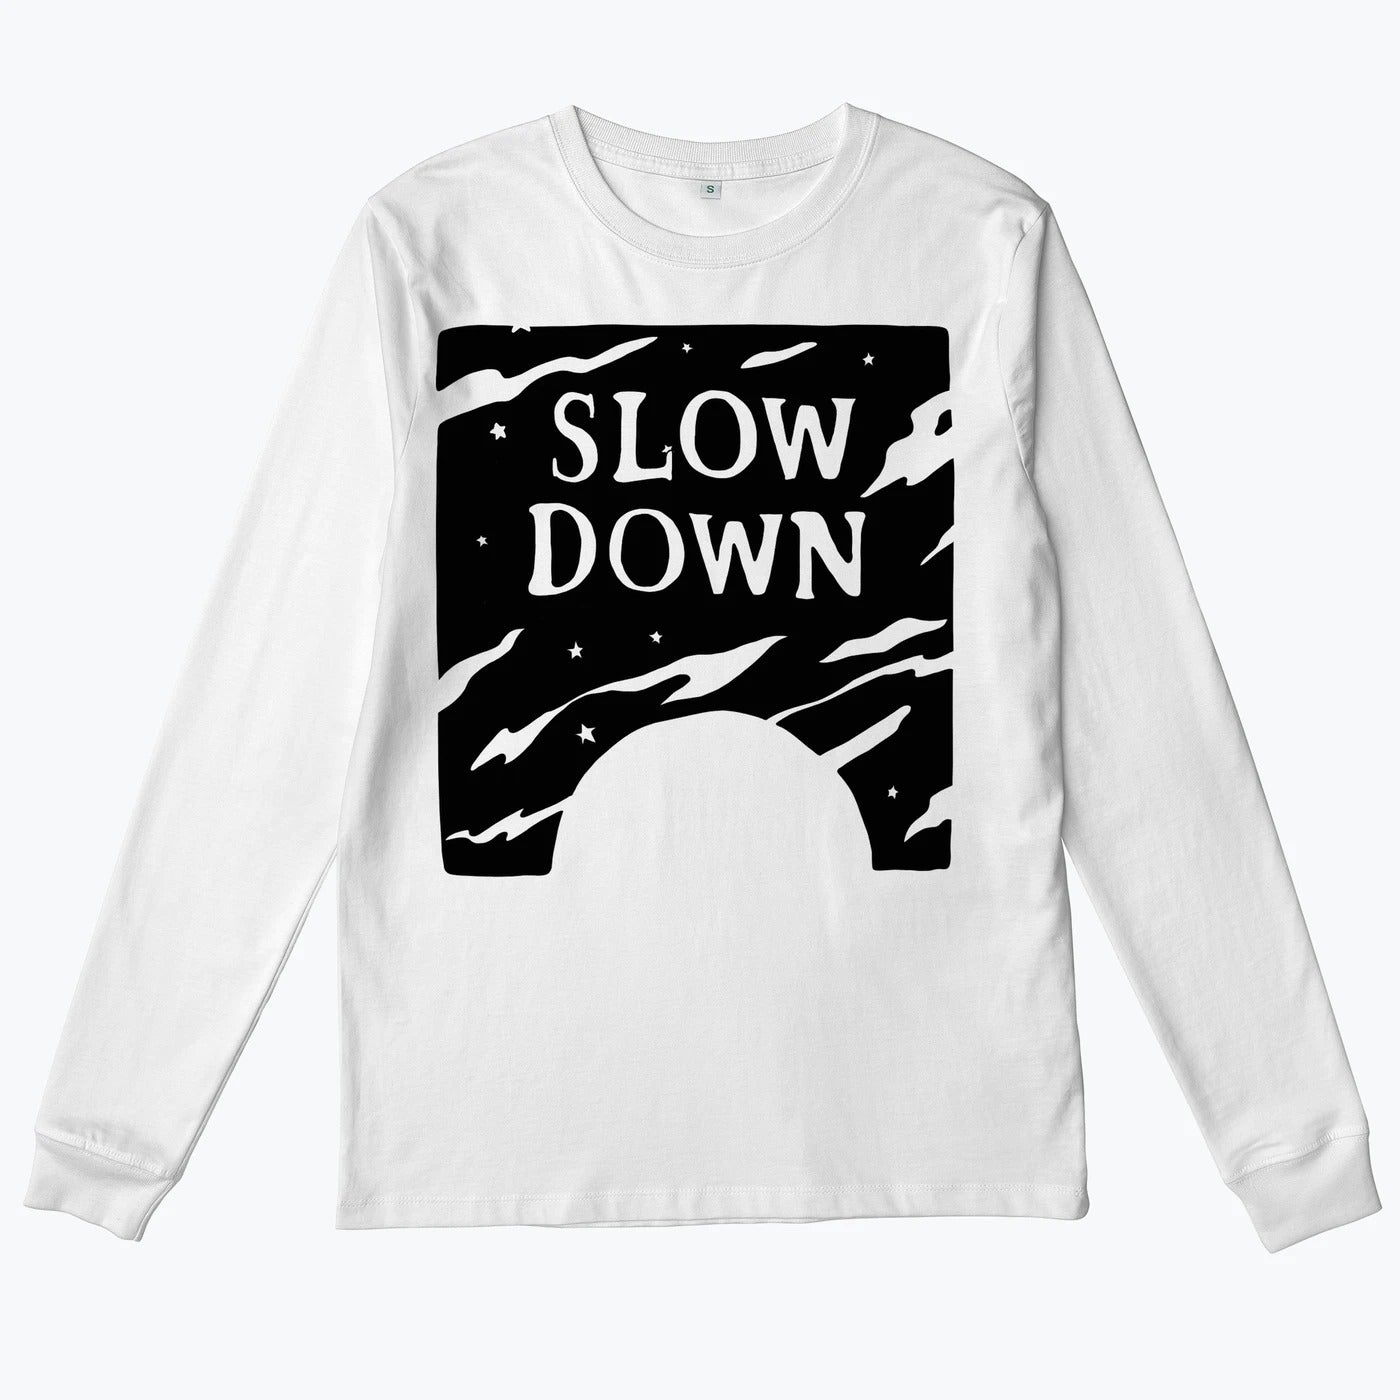 Headfirst + Slow Down Long Sleeve T-Shirt